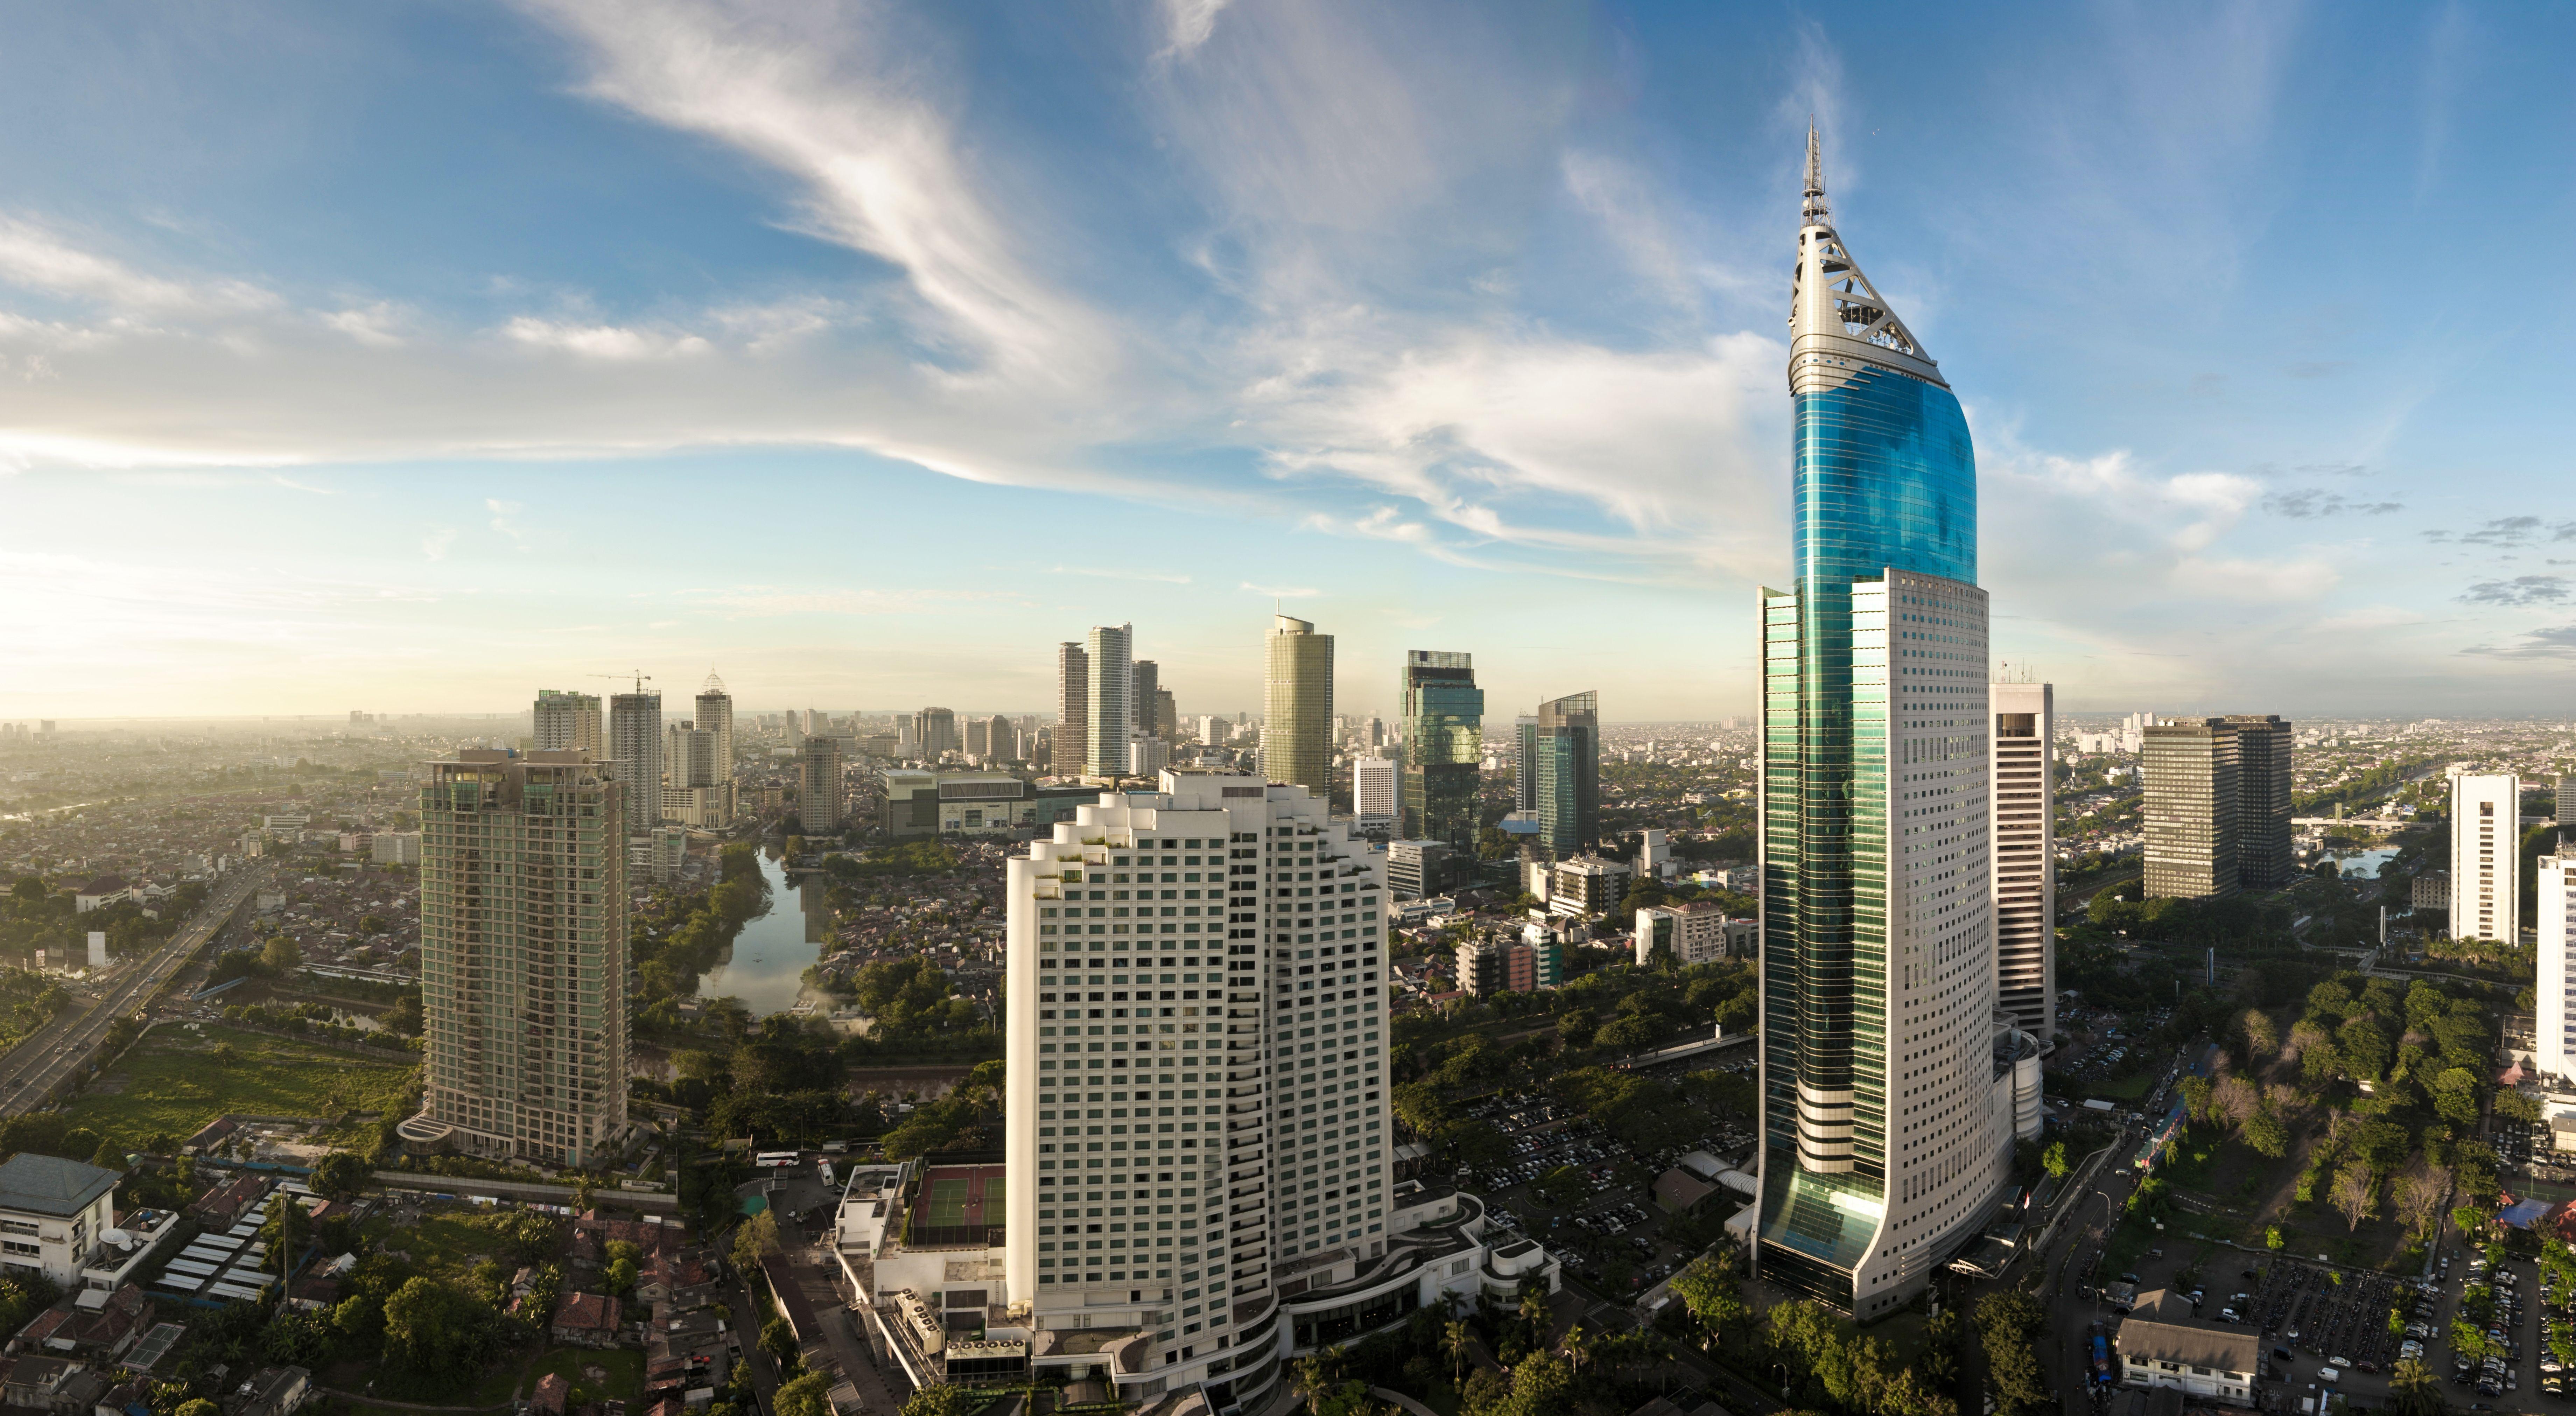 7361x4046px Jakarta Indonesia (14681.46 KB).08.2015